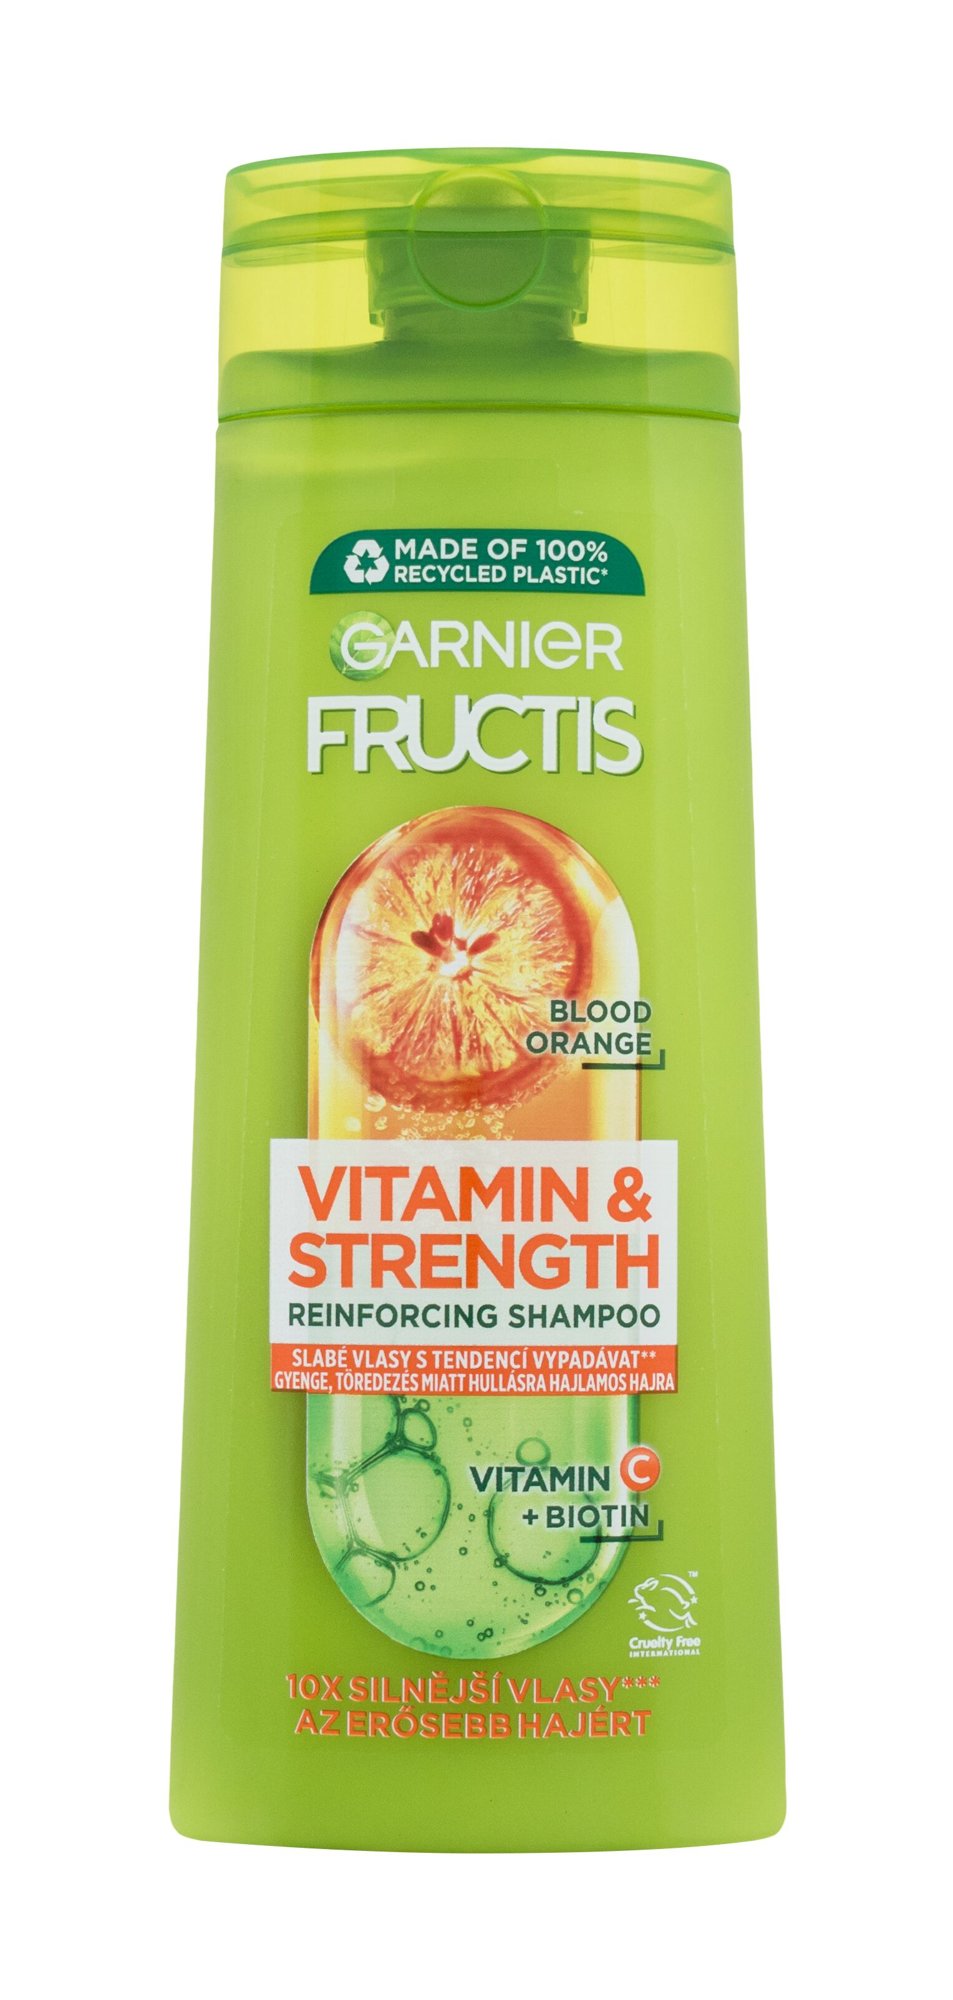 Garnier Fructis Vitamin & Strength Reinforcing Shampoo šampūnas